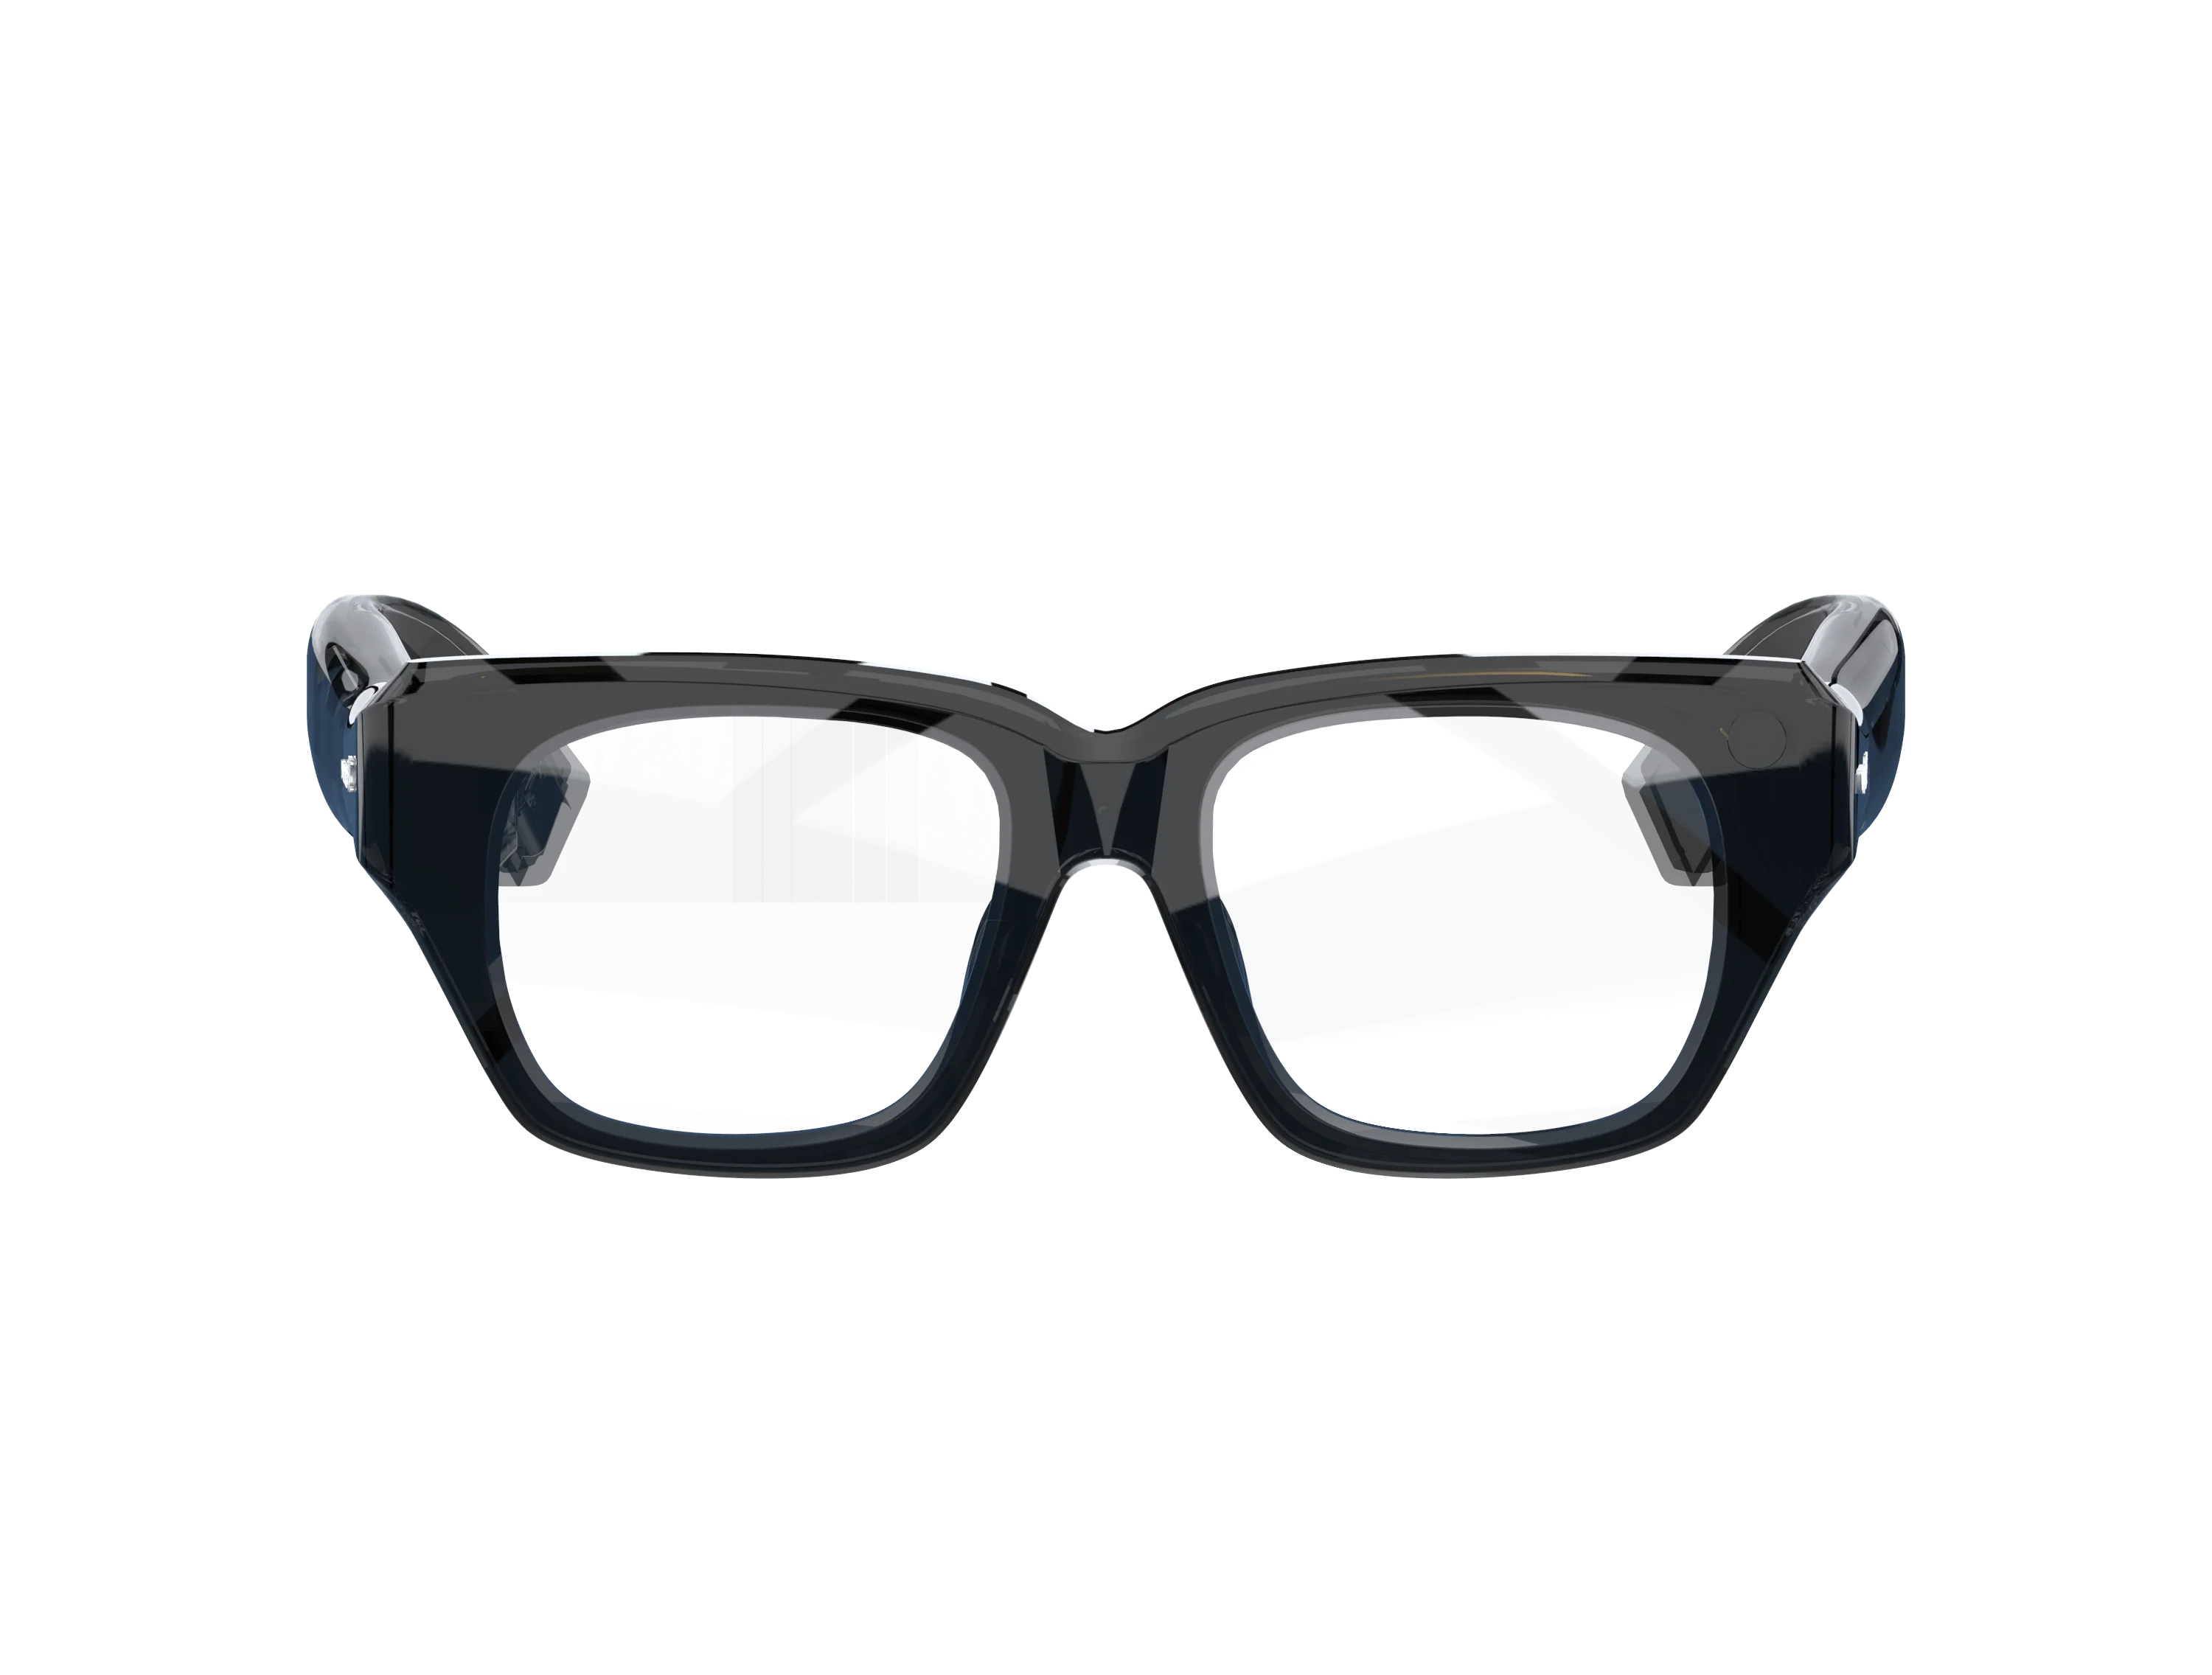 INMO Air-gafas inteligentes AR con cámara HD, vidrio INMOLENS - AliExpress